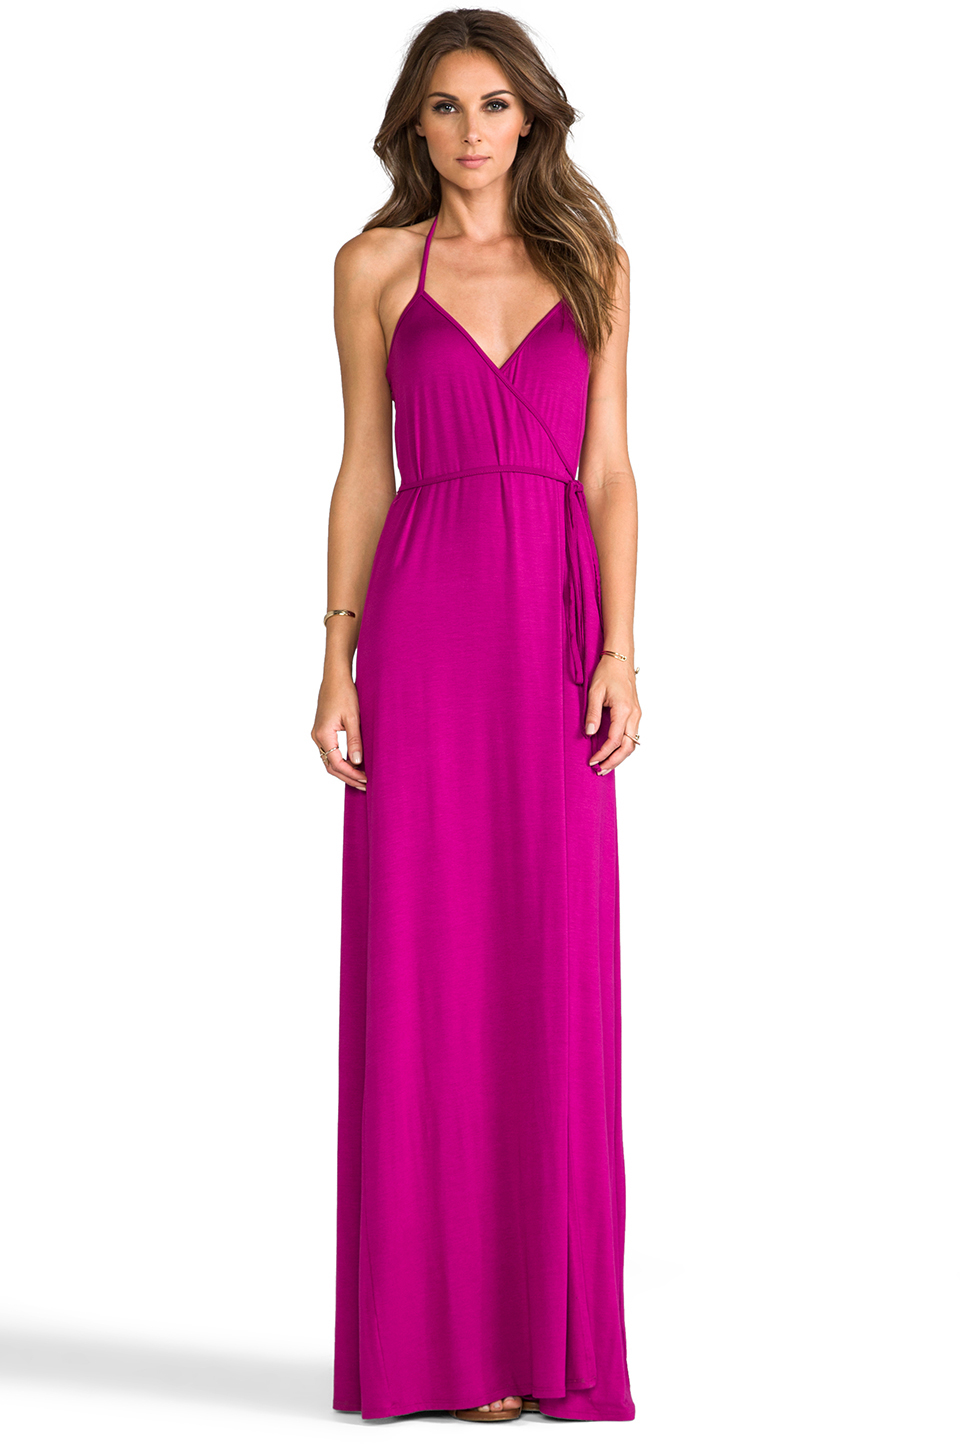 Rachel Pally Dallas Dress in Primrose (Pink) - Lyst